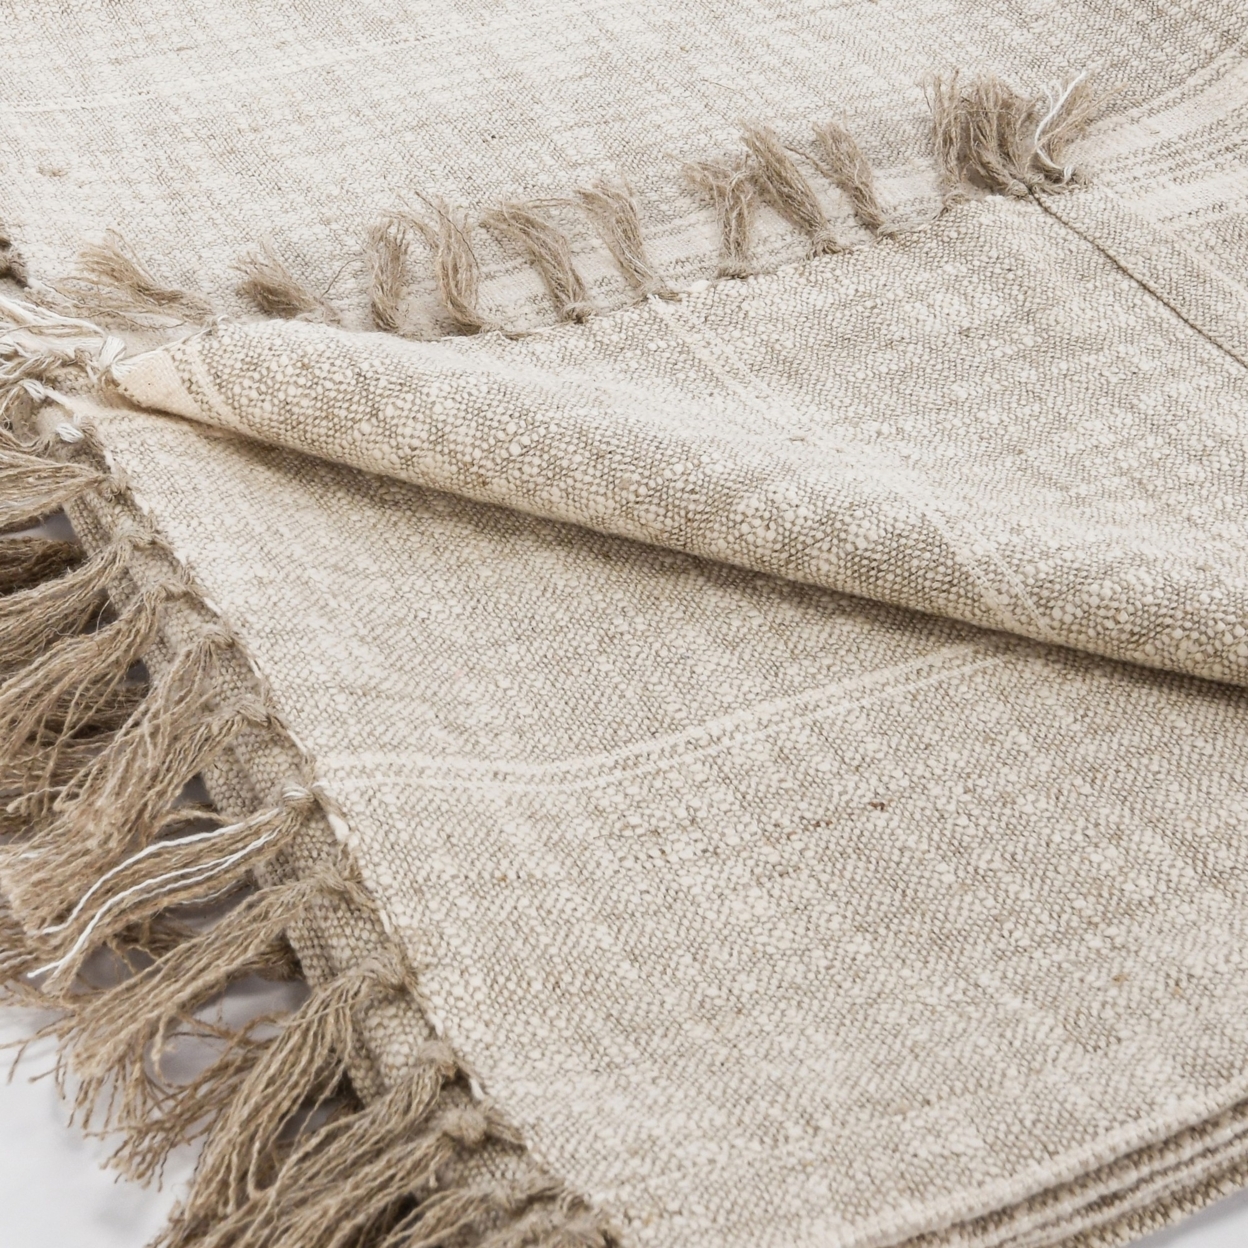 Uno 50 Inch Throw Blanket, Cotton And Linen, Woven Striped Design, Beige- Saltoro Sherpi